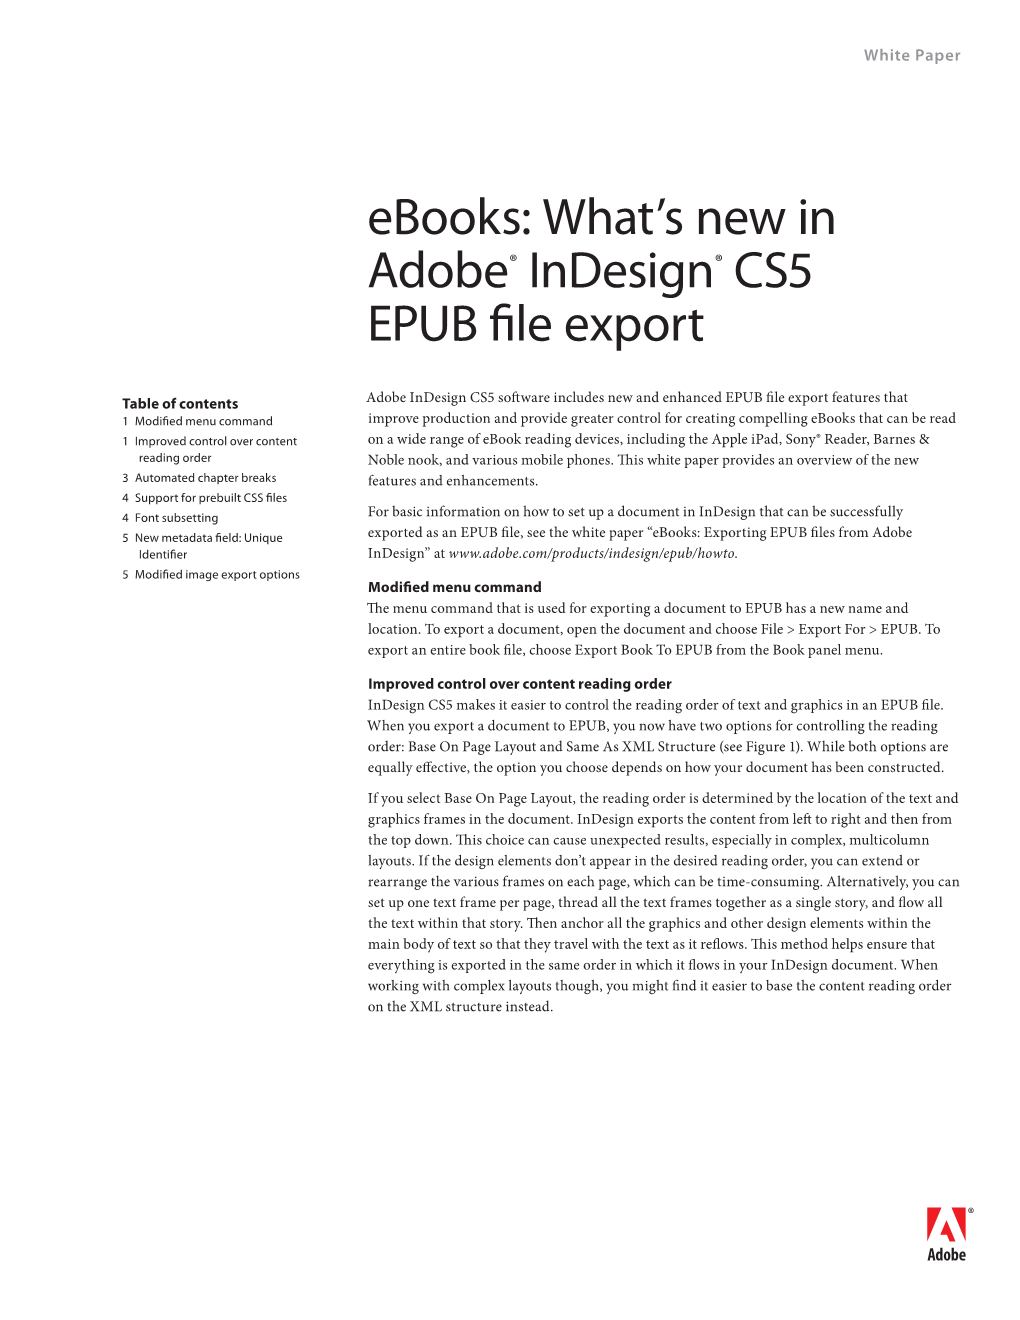 Ebooks: What's New in Adobe® Indesign® CS5 EPUB File Export